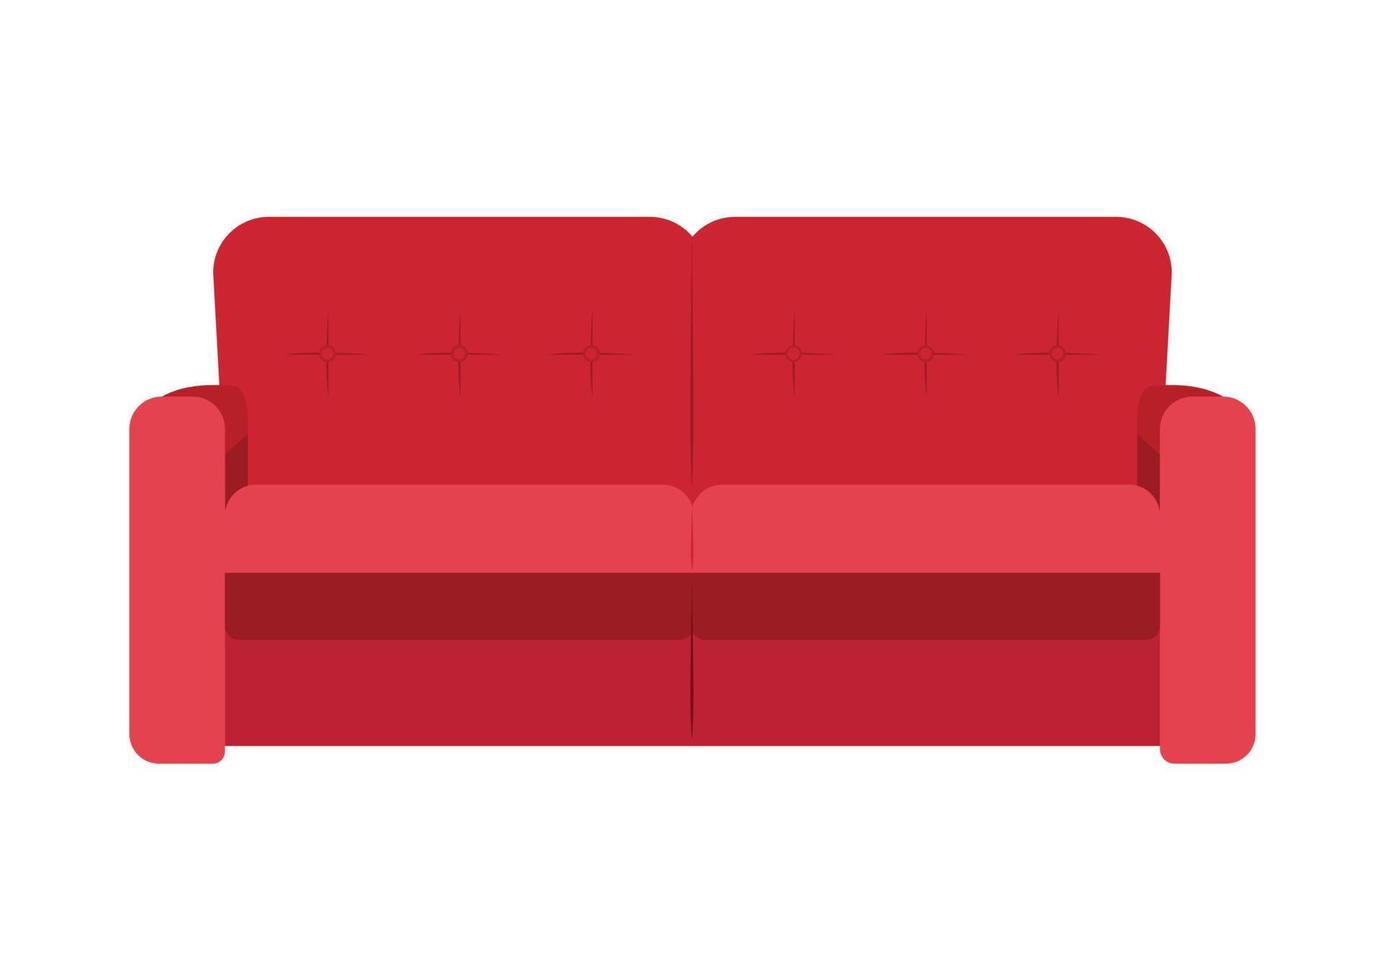 Flat style cartoon sofa. Clipart sofa isolated on white background vector